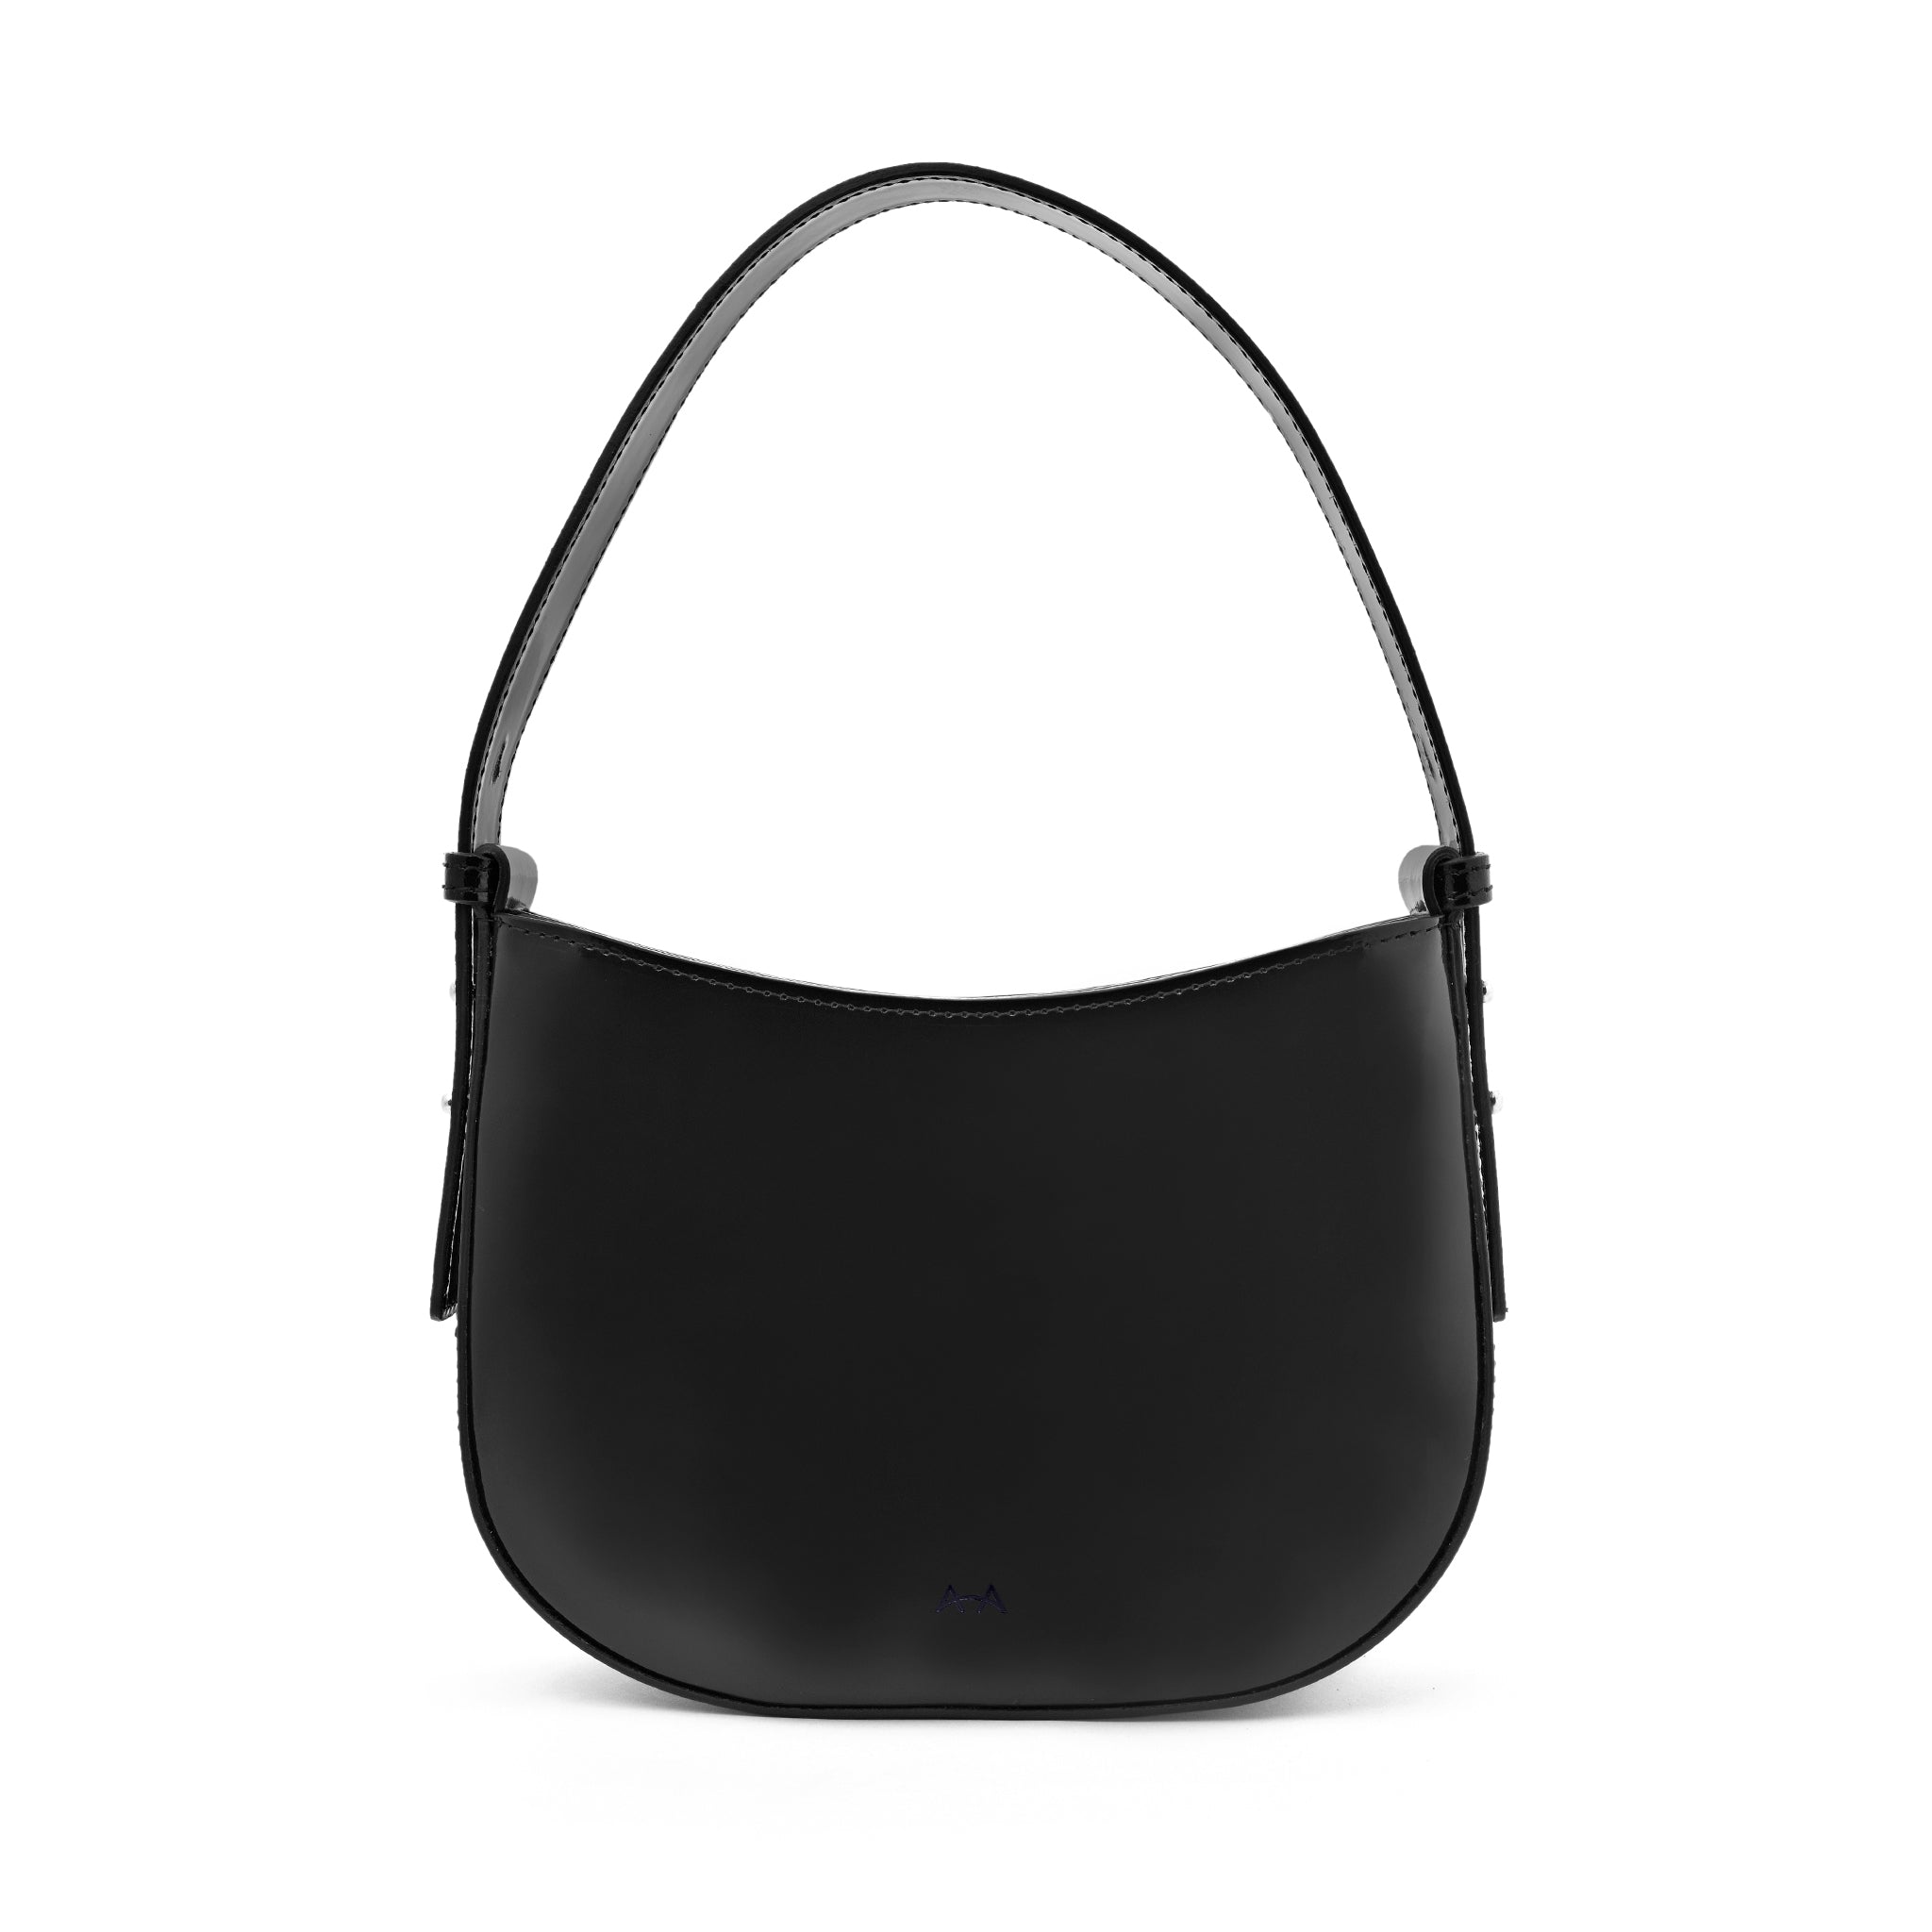 Mio Black Semi Patent Leather Shoulder Bag CL10678 NERO - 1